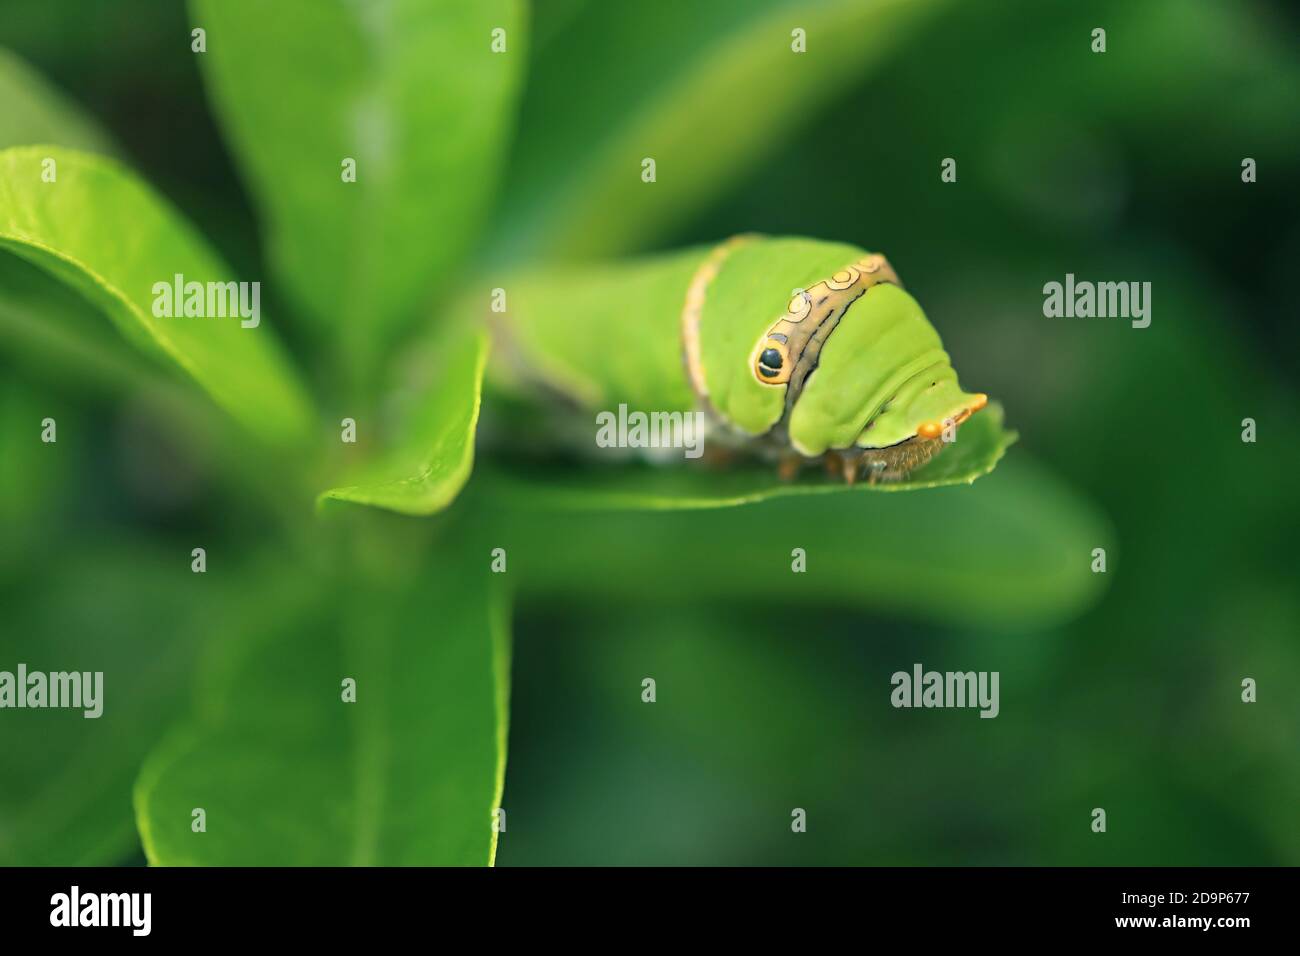 Closeup un vibrante verde 5th instar Lime Swallowtail Caterpillar descansando En una hoja de árbol de lima Foto de stock